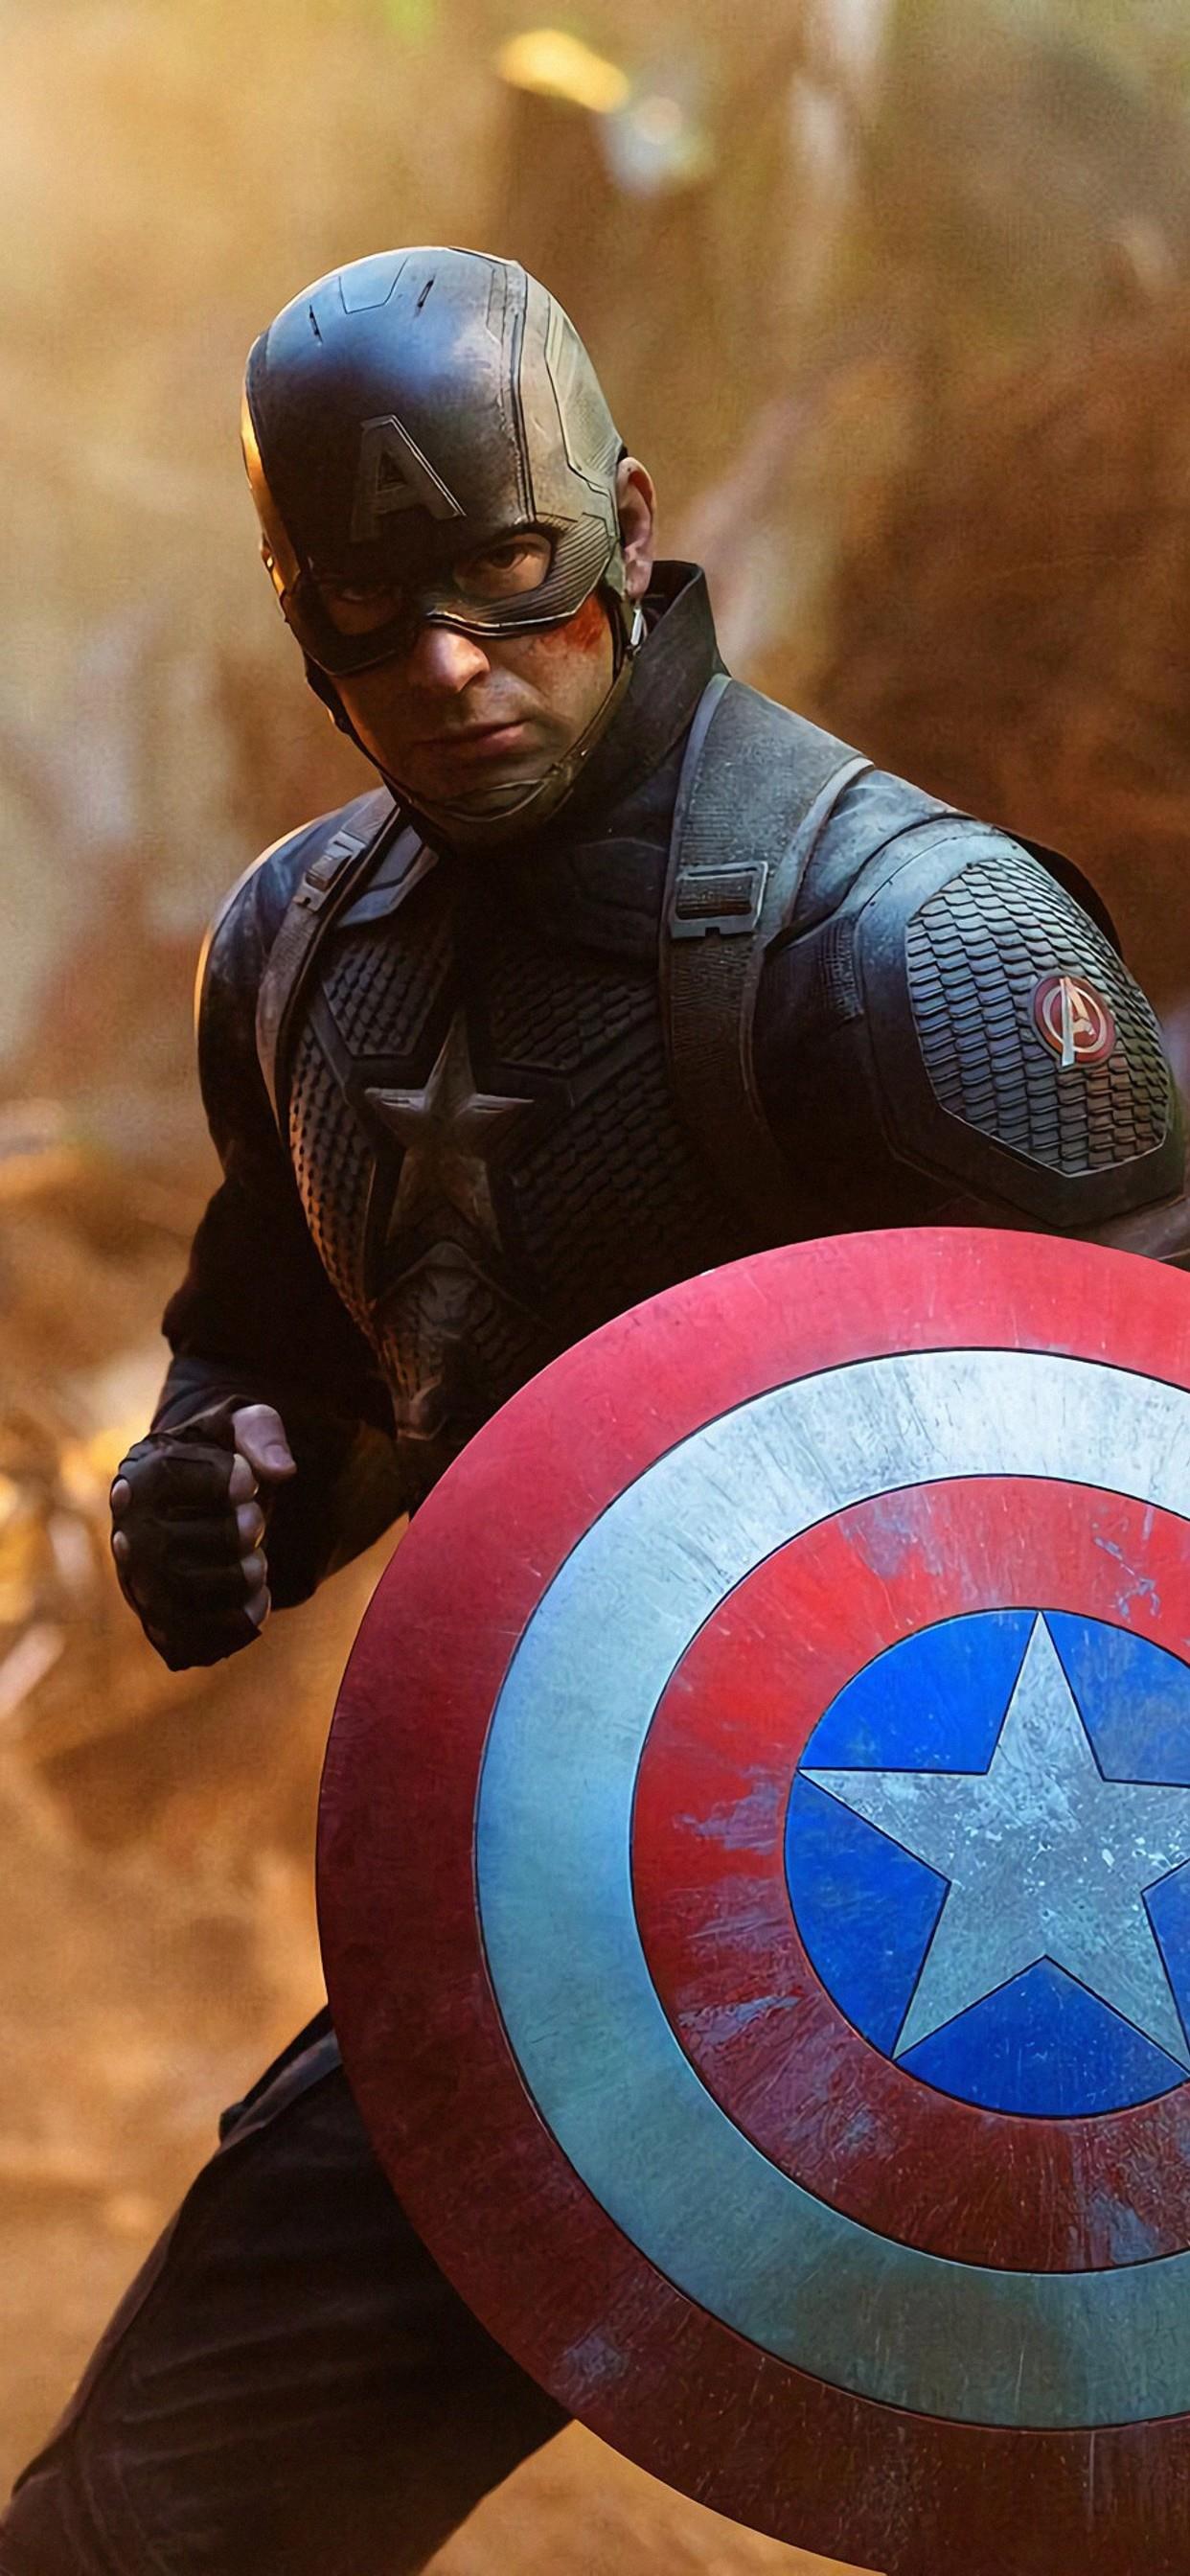 captain america avengers endgame movie iPhone X Wallpaper Free